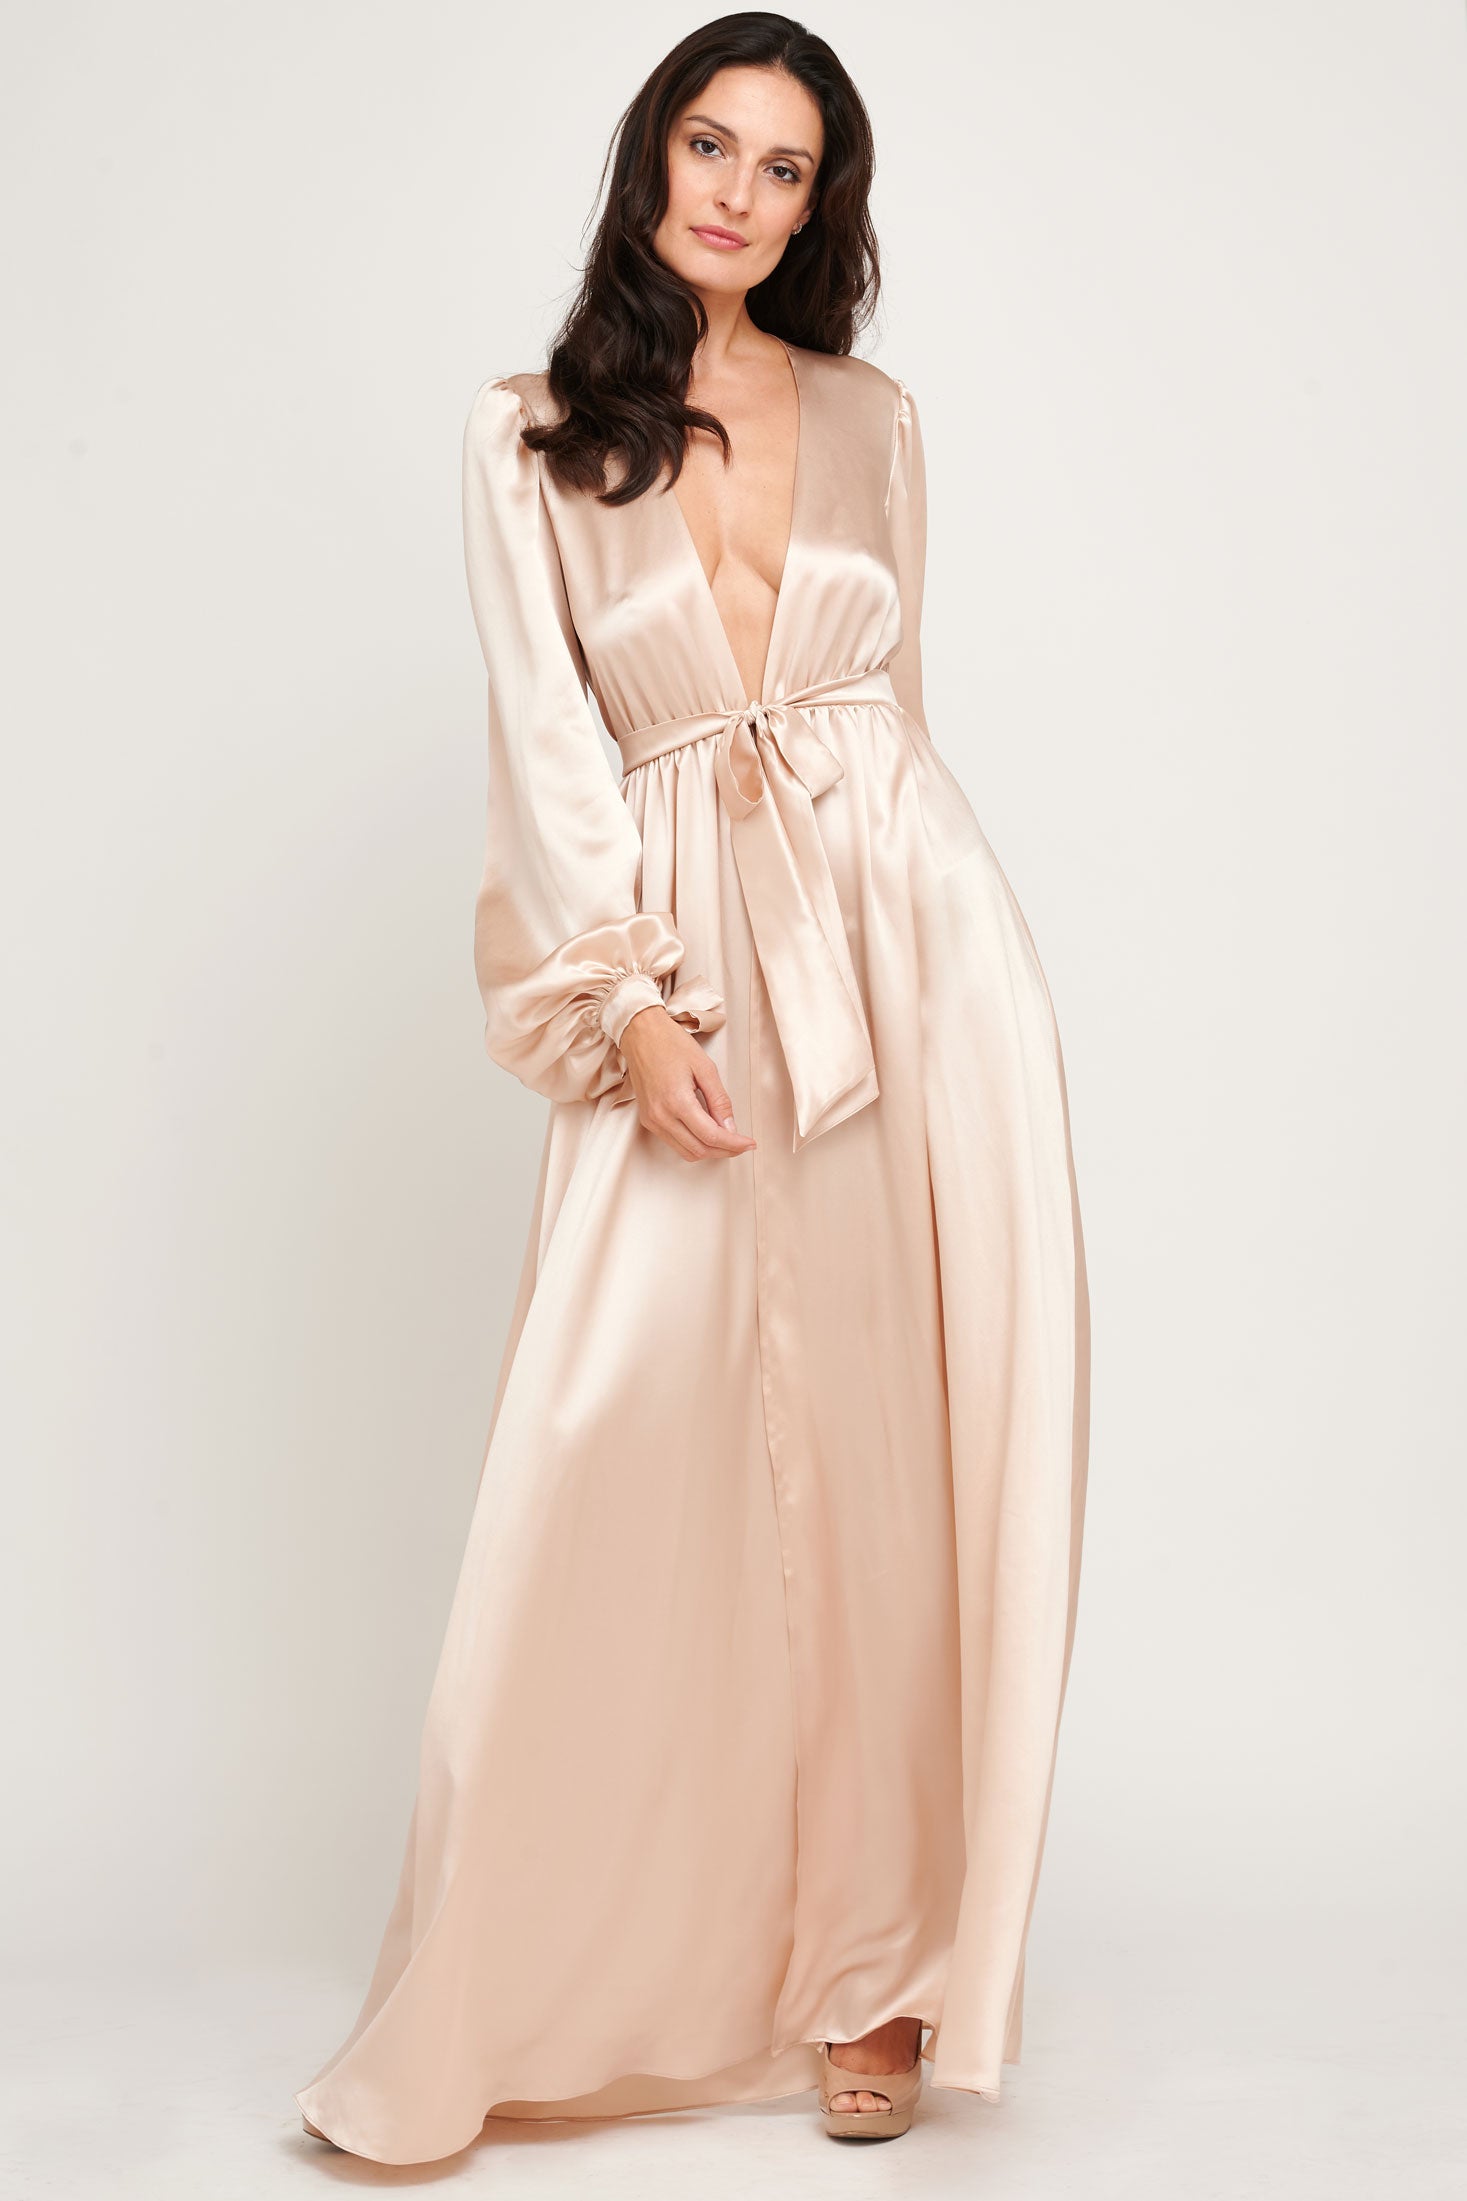 Luxury designer blush pink robe, made in 100% silk satin with floor-length skirt